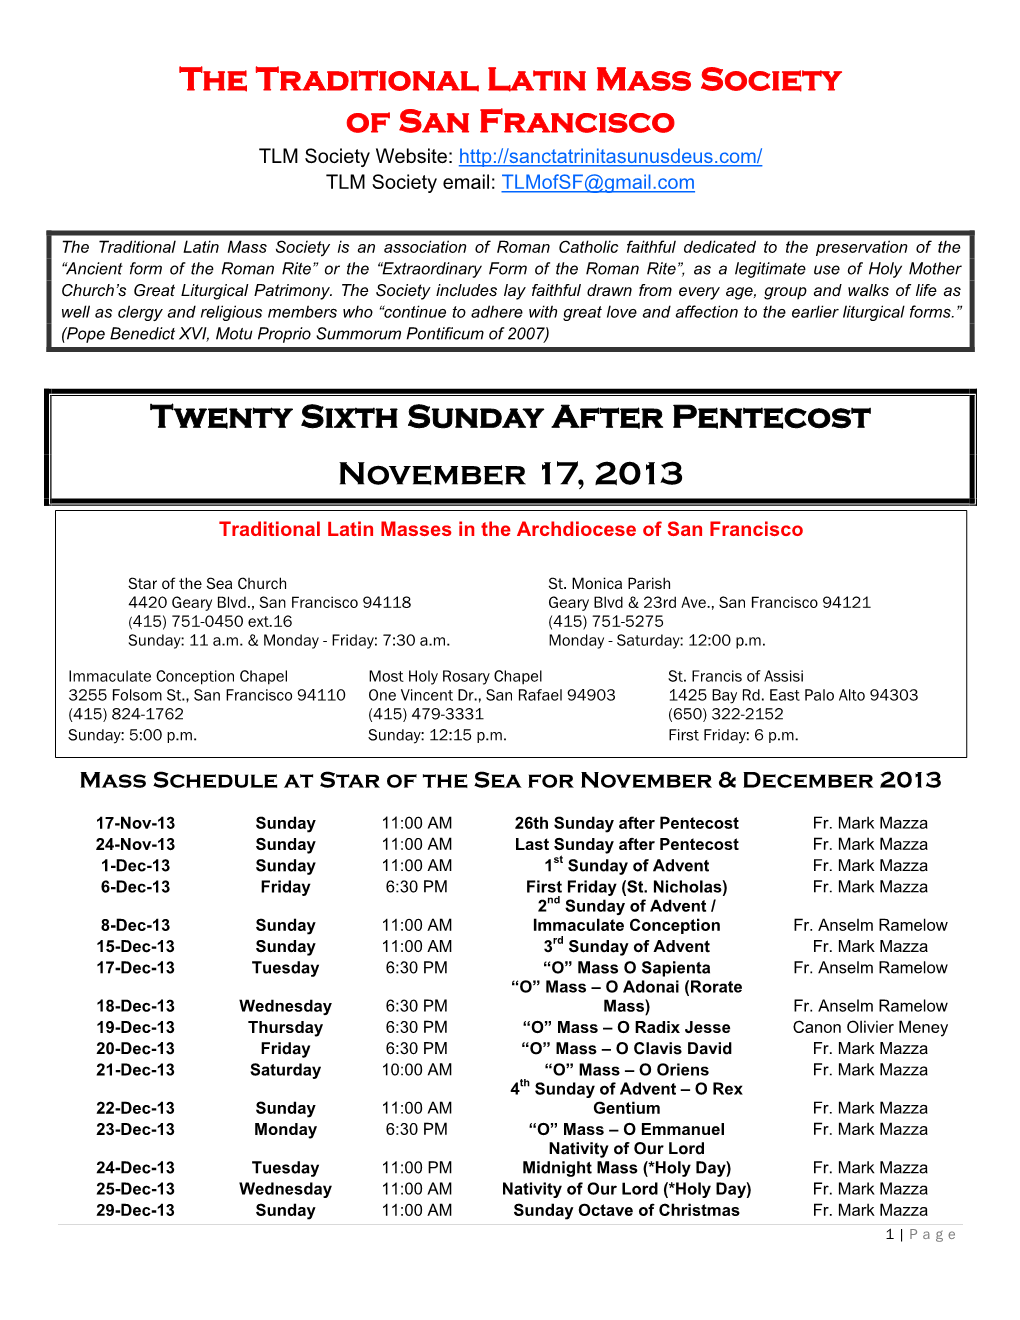 Sunday After Pentecost November 17, 2013